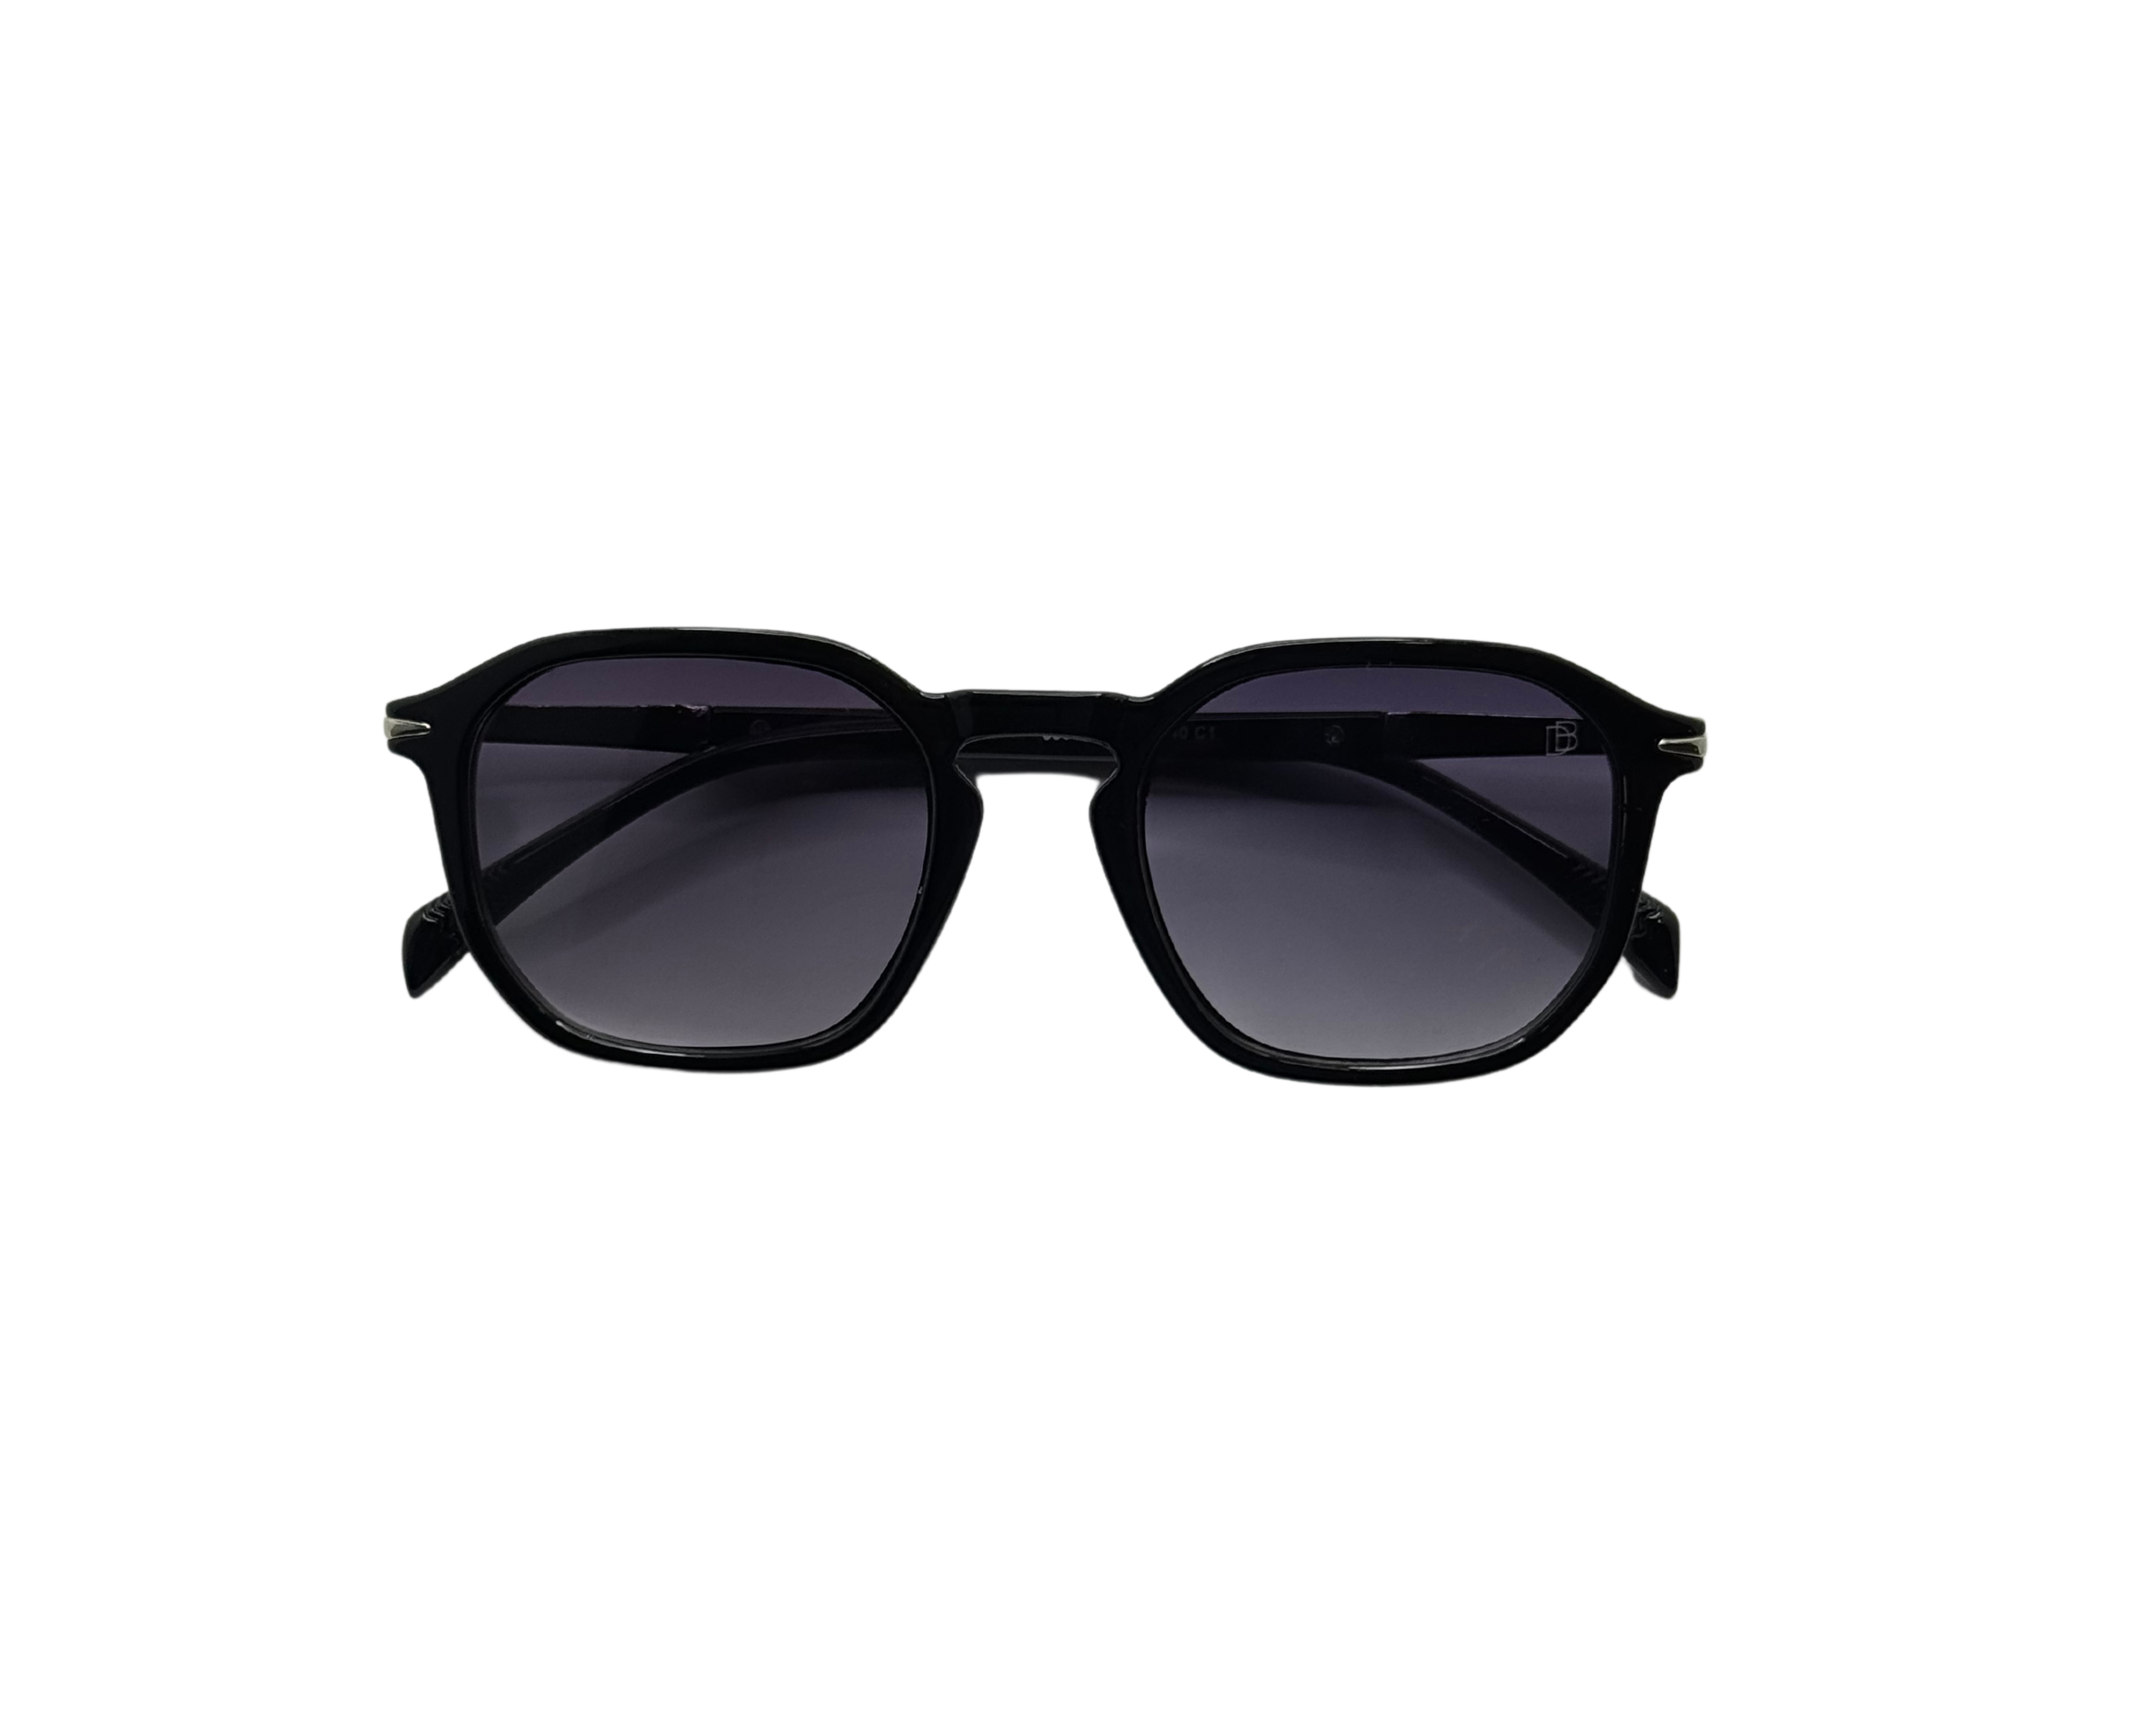 NS Deluxe - 6619 - Black - Sunglasses